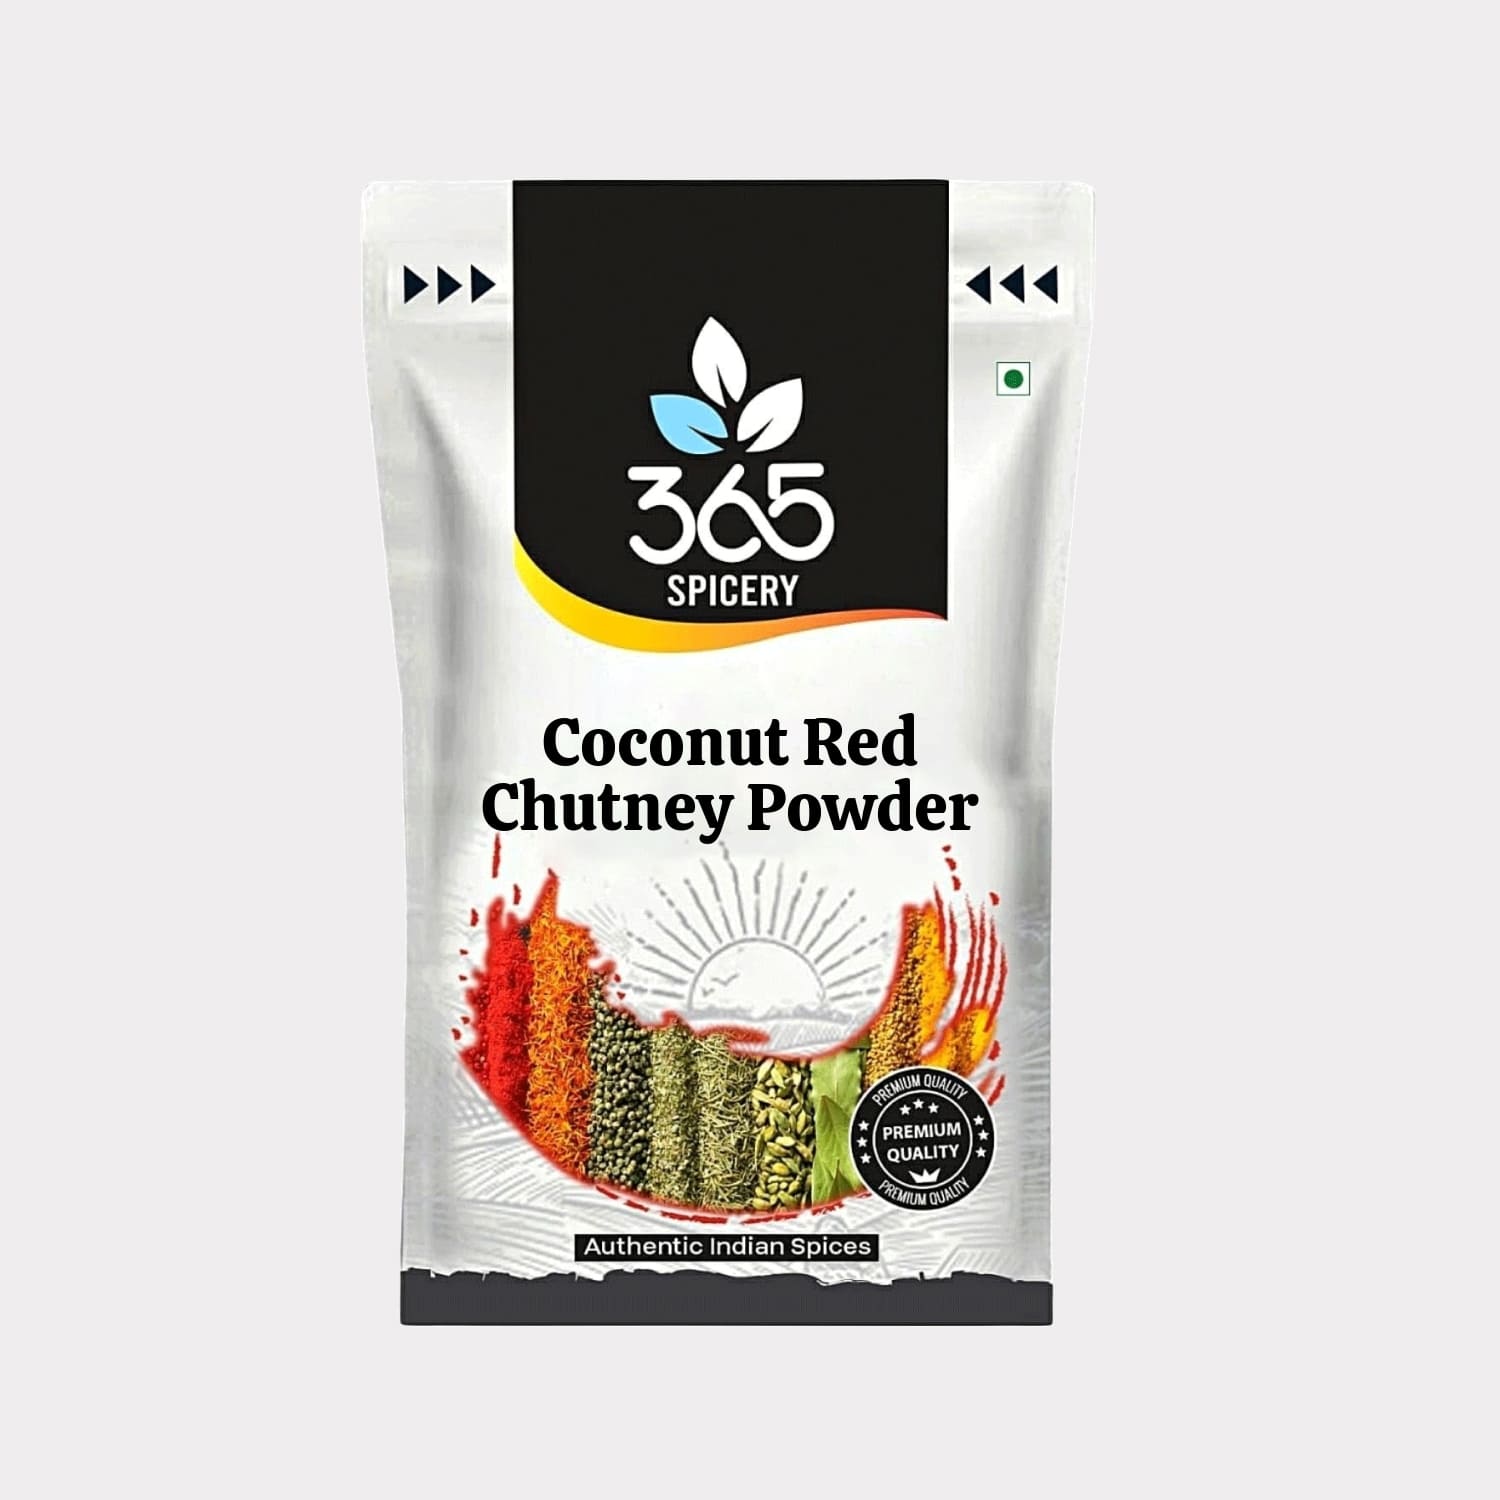 Coconut Red Chutney Powder